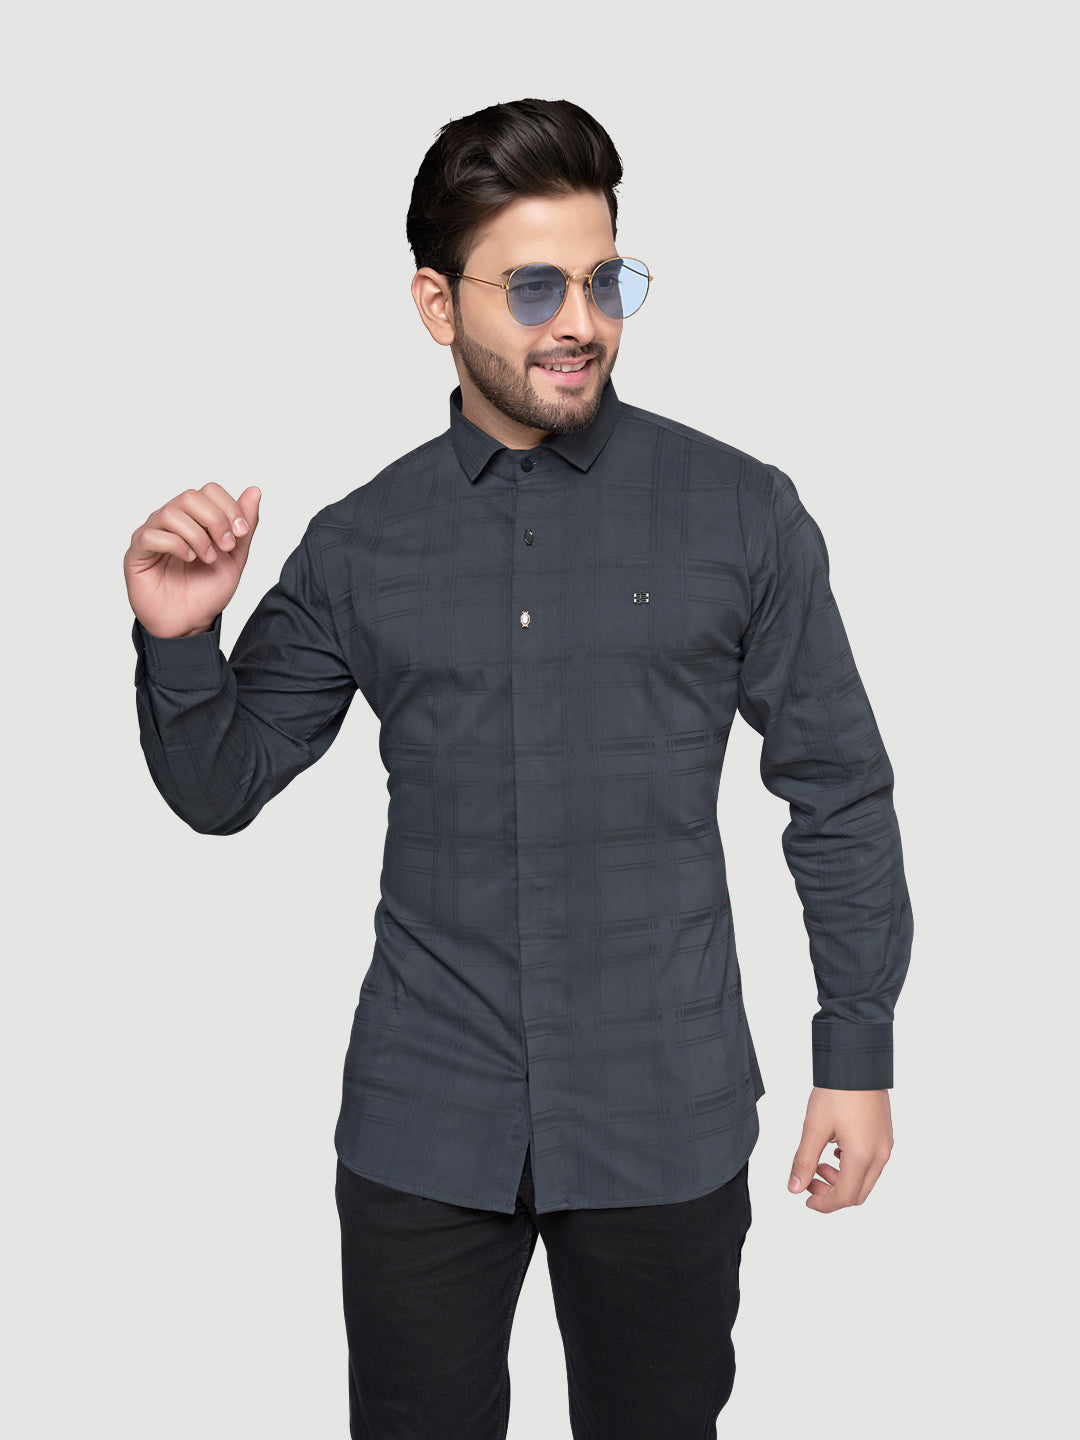 Designer Shirts with Collar Accessories- Grey